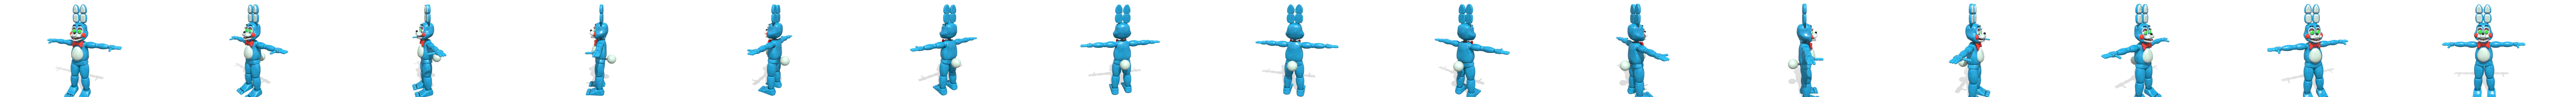 Toy Bonnie  FNAF AR - Download Free 3D model by MrSpringMen (@MrSpringMen)  [16be542]